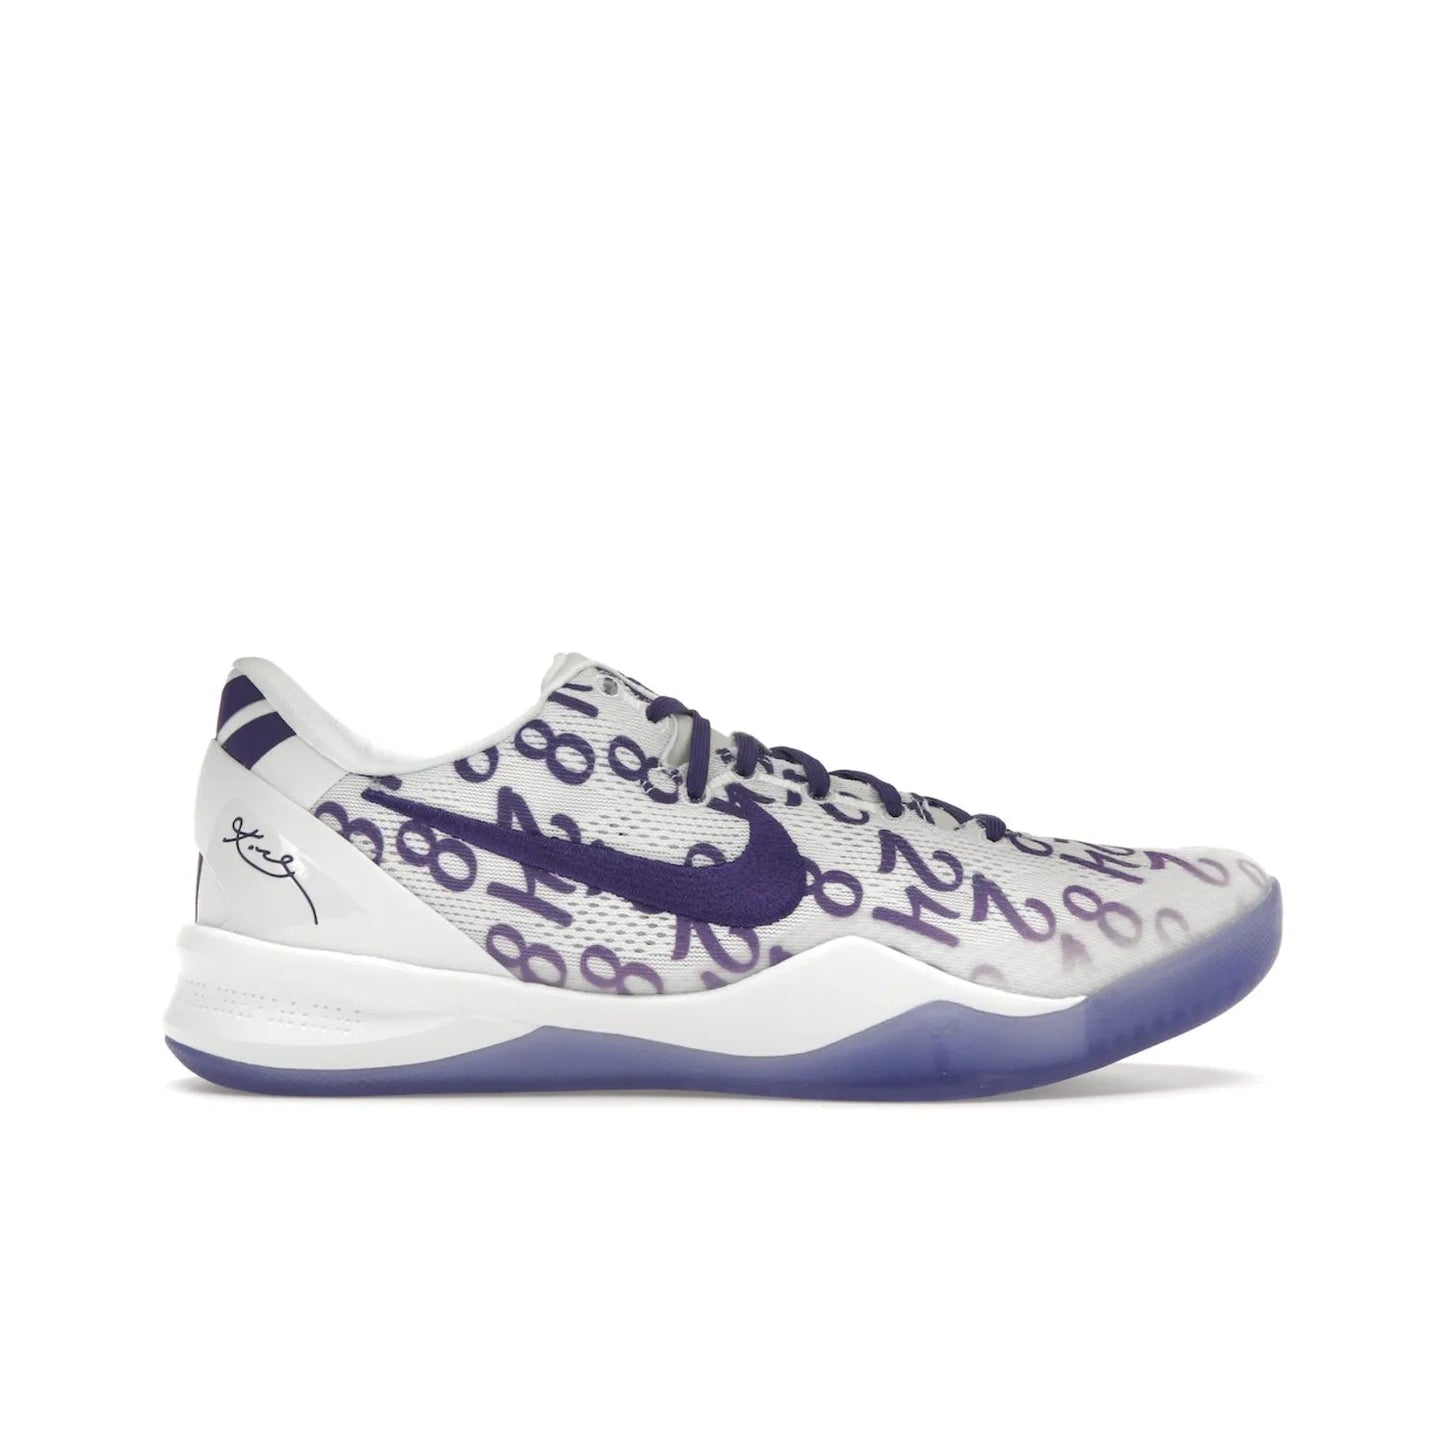 Nike Kobe 8 Protro Court Purple - Image 1 - Only at www.BallersClubKickz.com - 